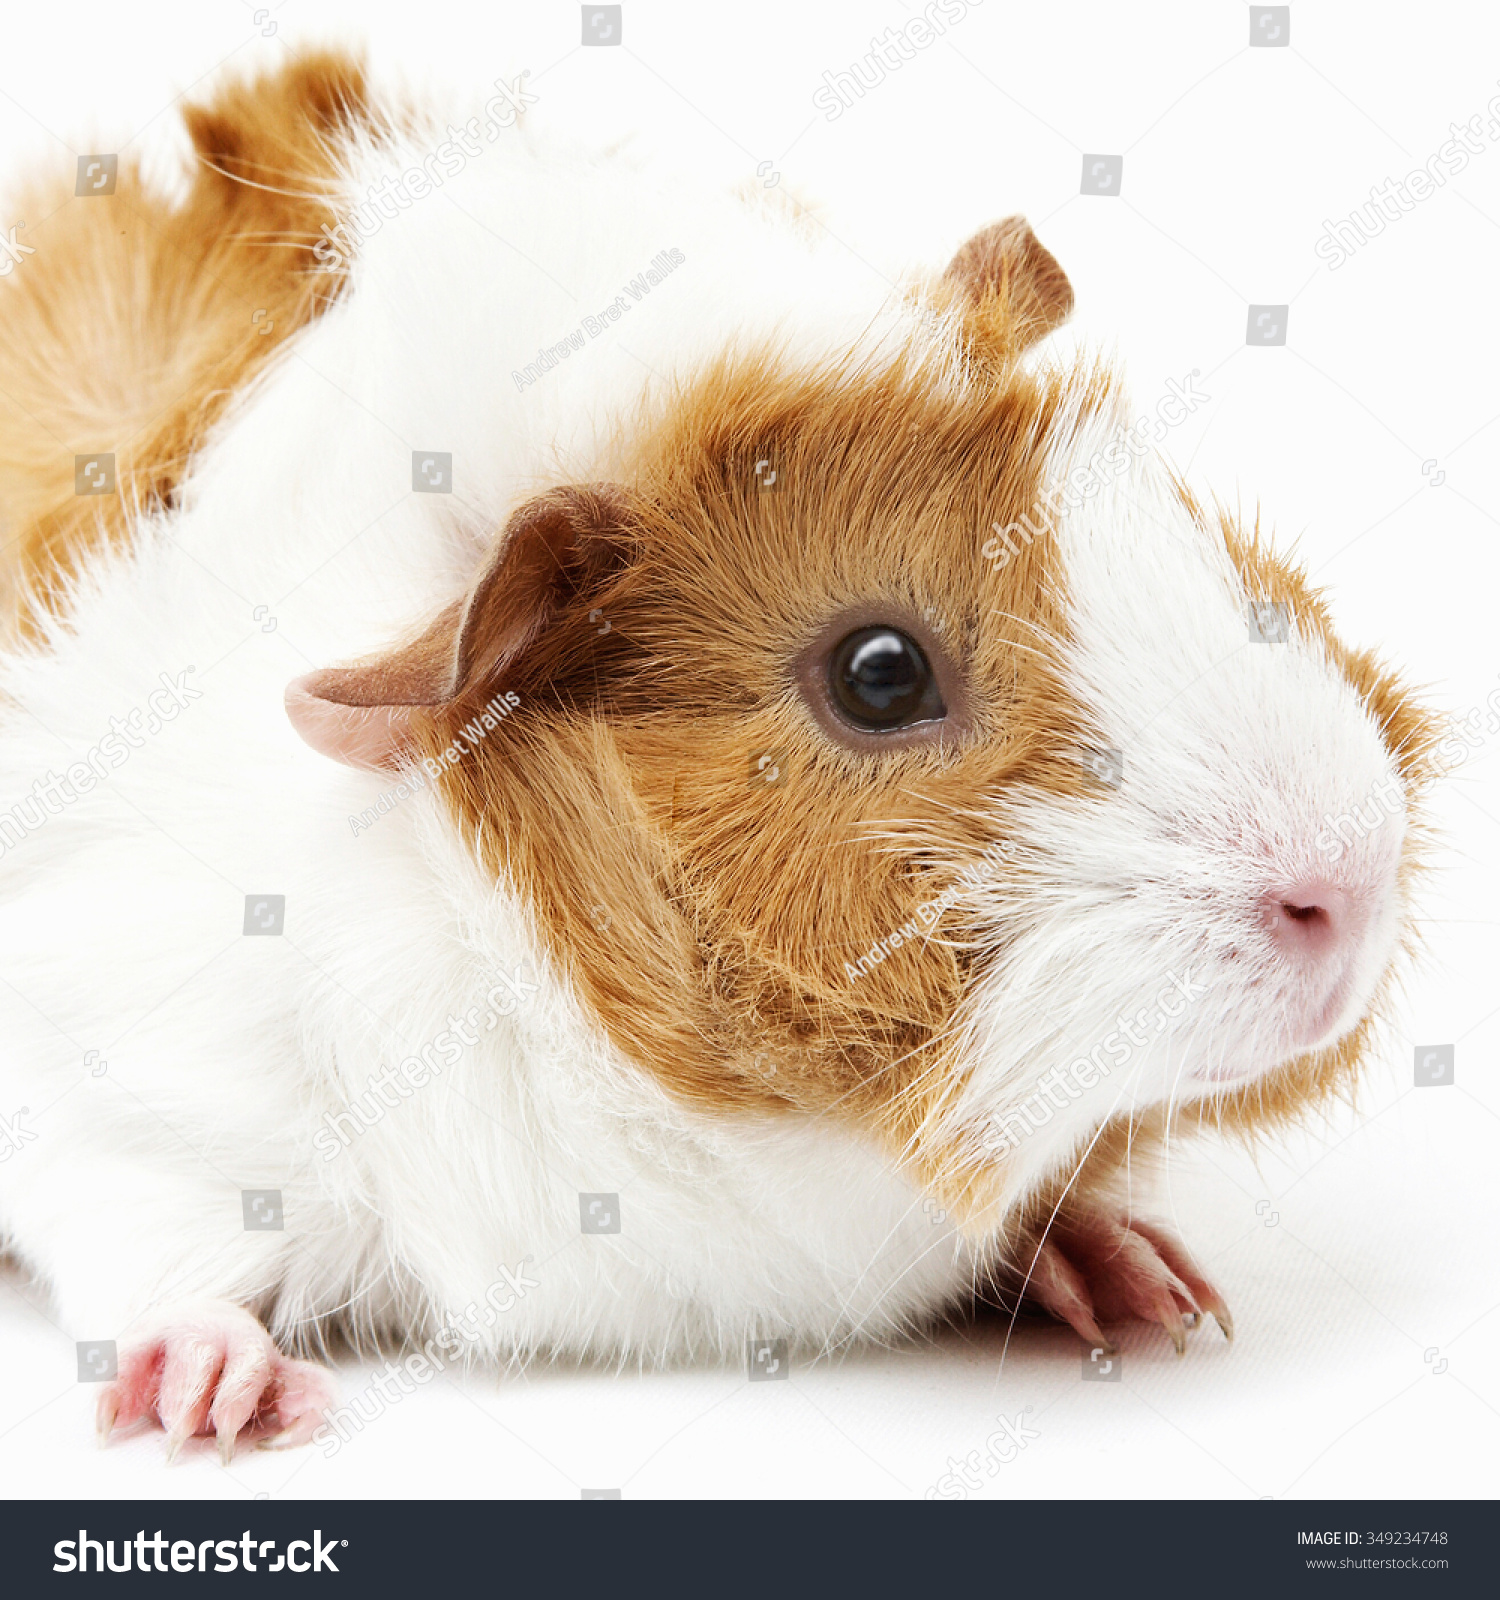 ginger and white guinea pig